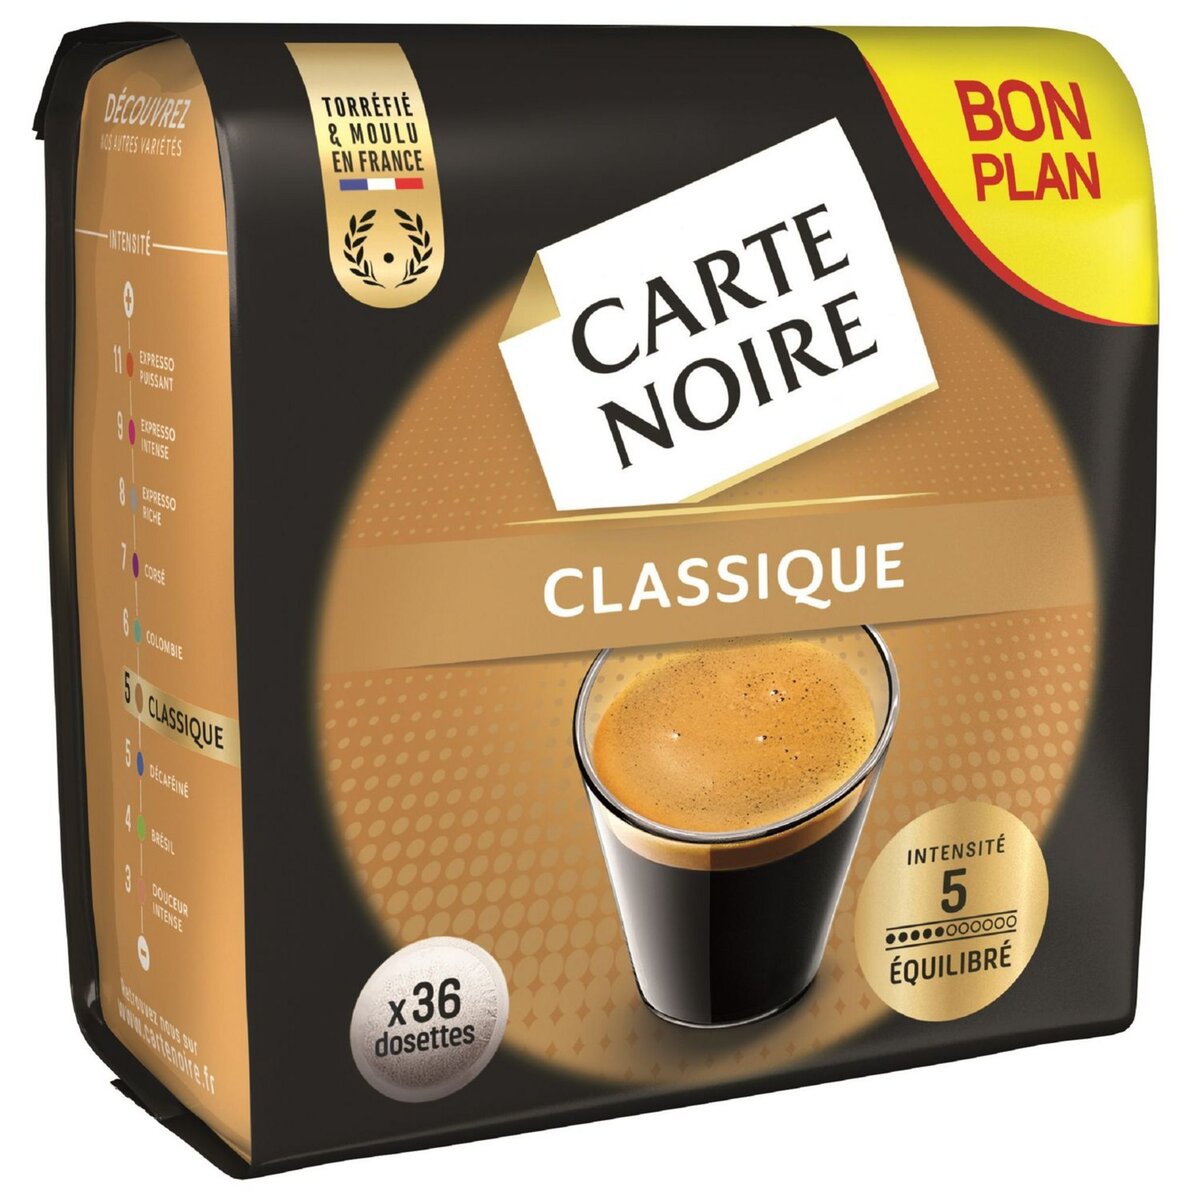 TASSIMO Dosettes de café L'Or café long classique 24 dosettes 156g pas cher  